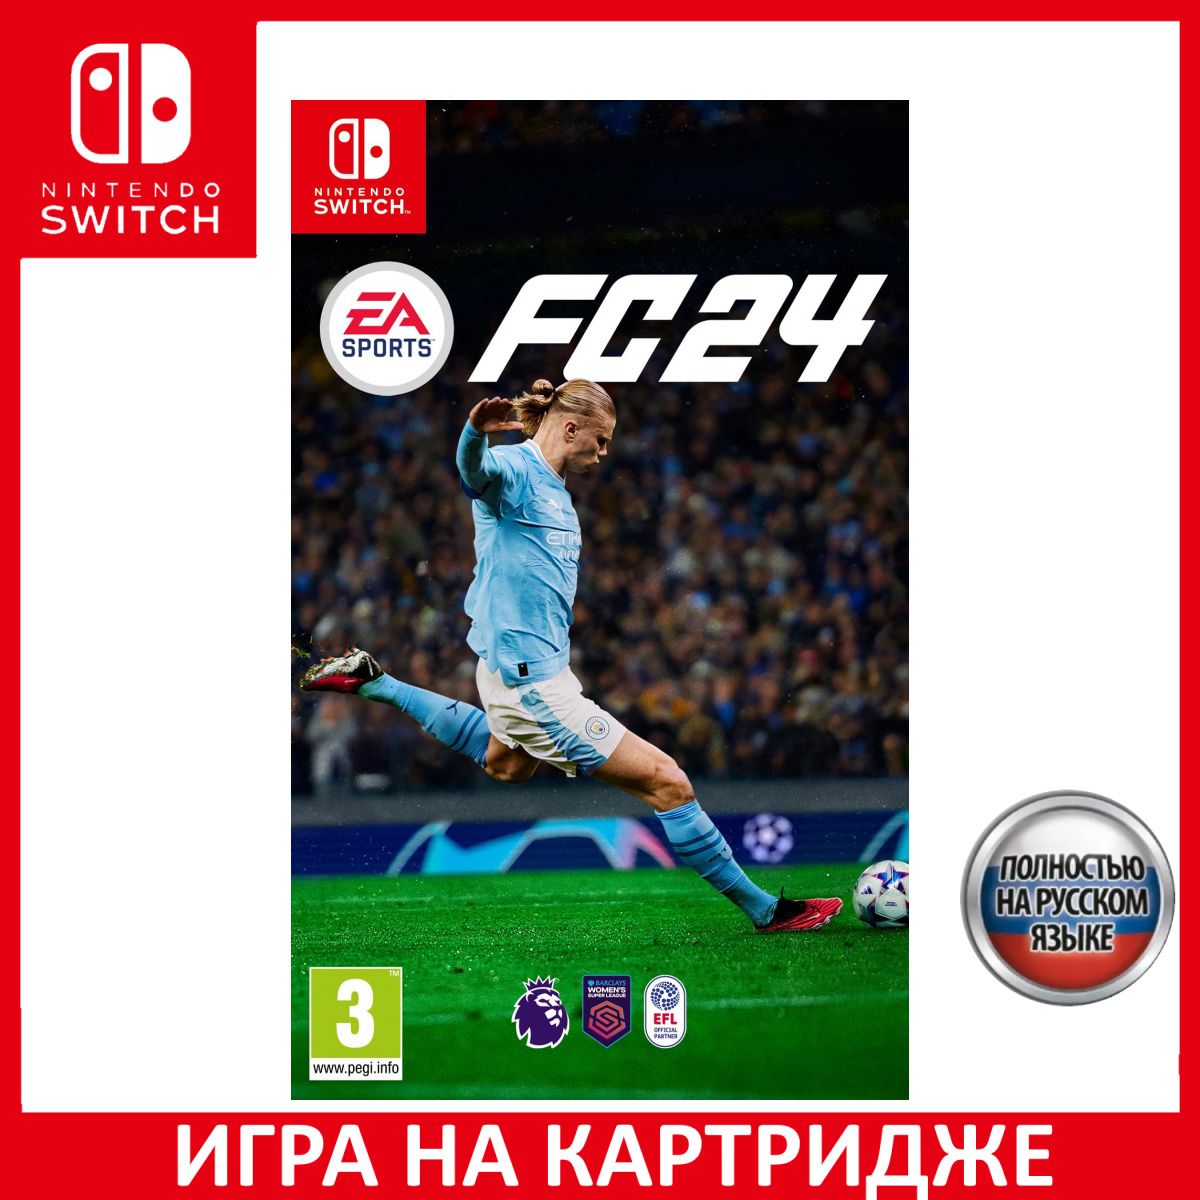 Fc 24 nintendo. ФИФА 24 Нинтендо. FC 24 на Nintendo Switch Российская лига. ФИФА 24 на Нинтендо свитч обзор.